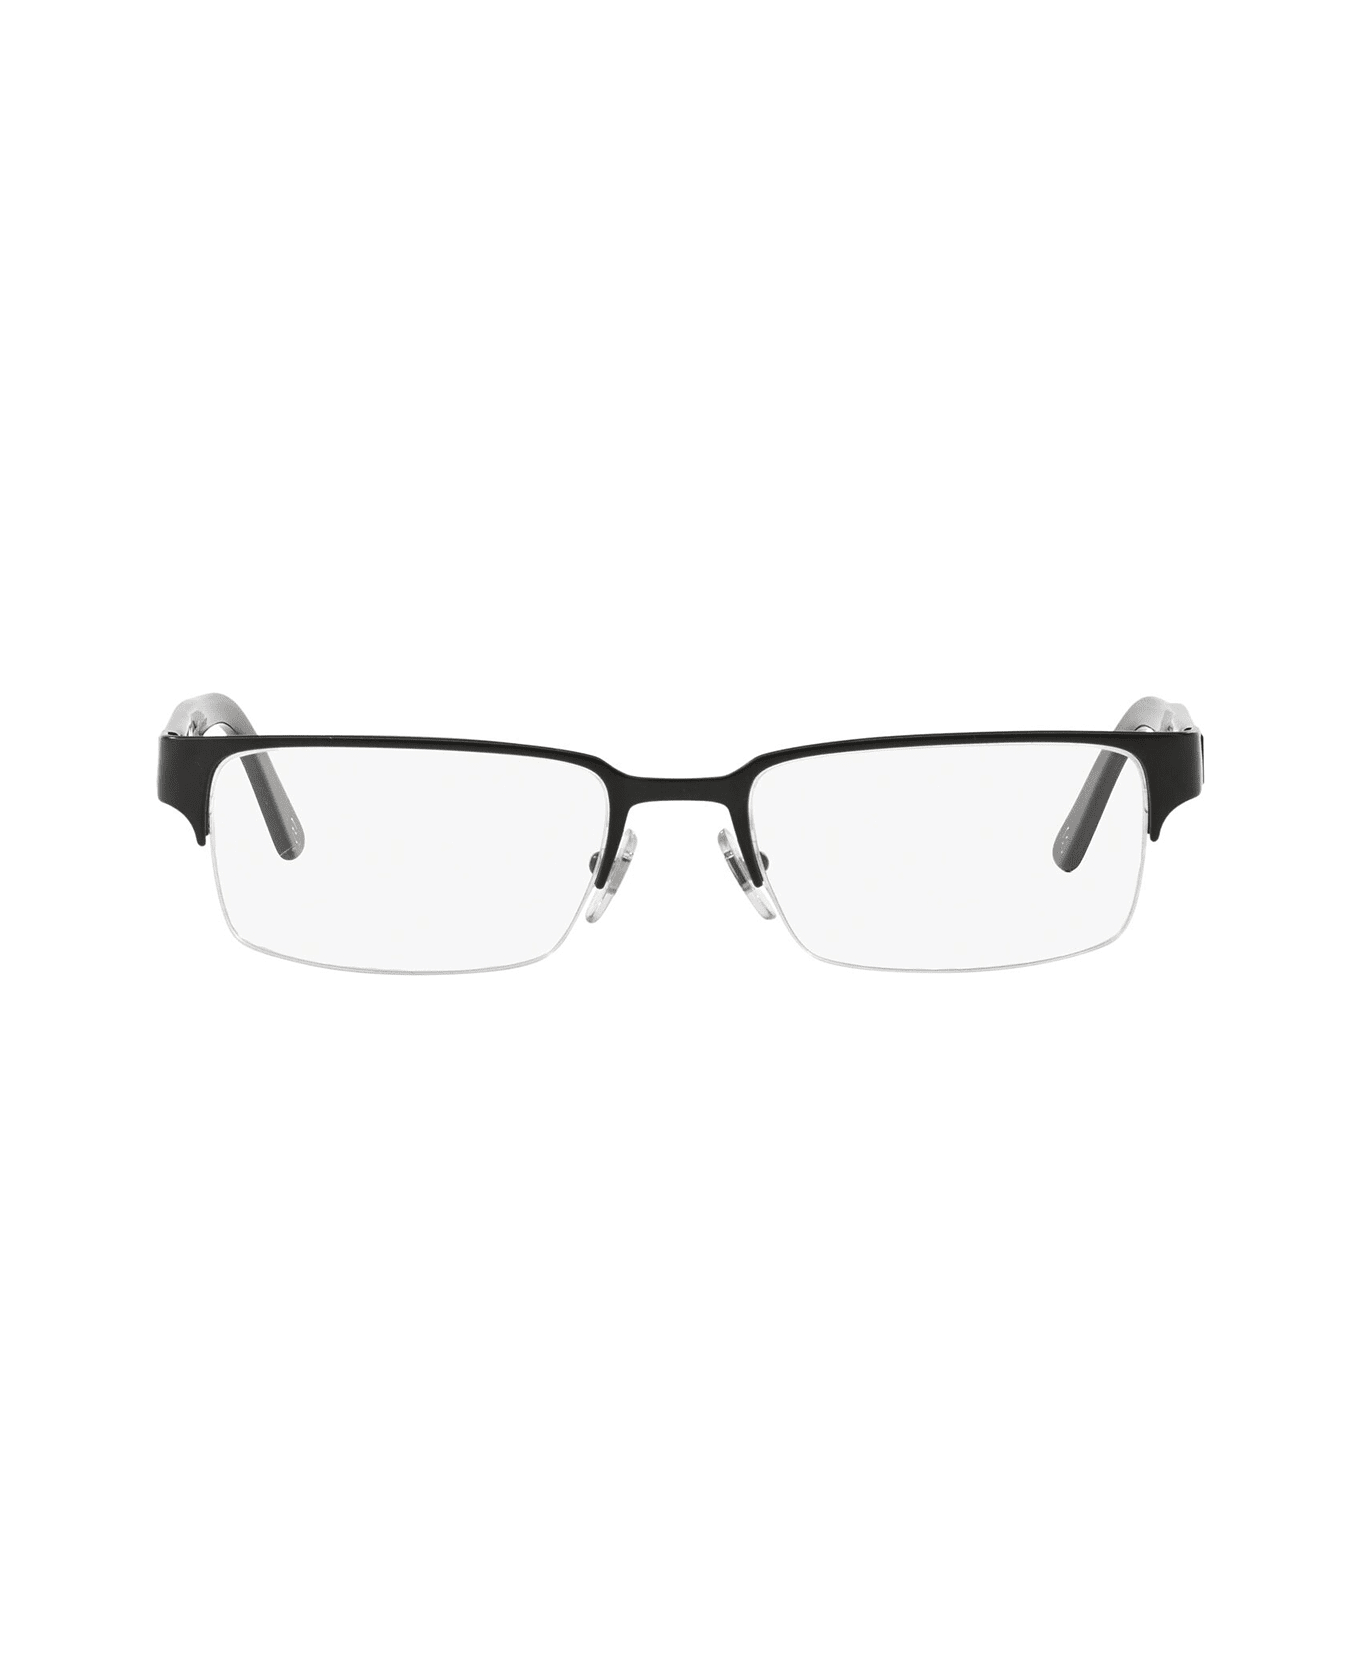 Versace Eyewear Ve1184 Matte Black Glasses - Matte Black